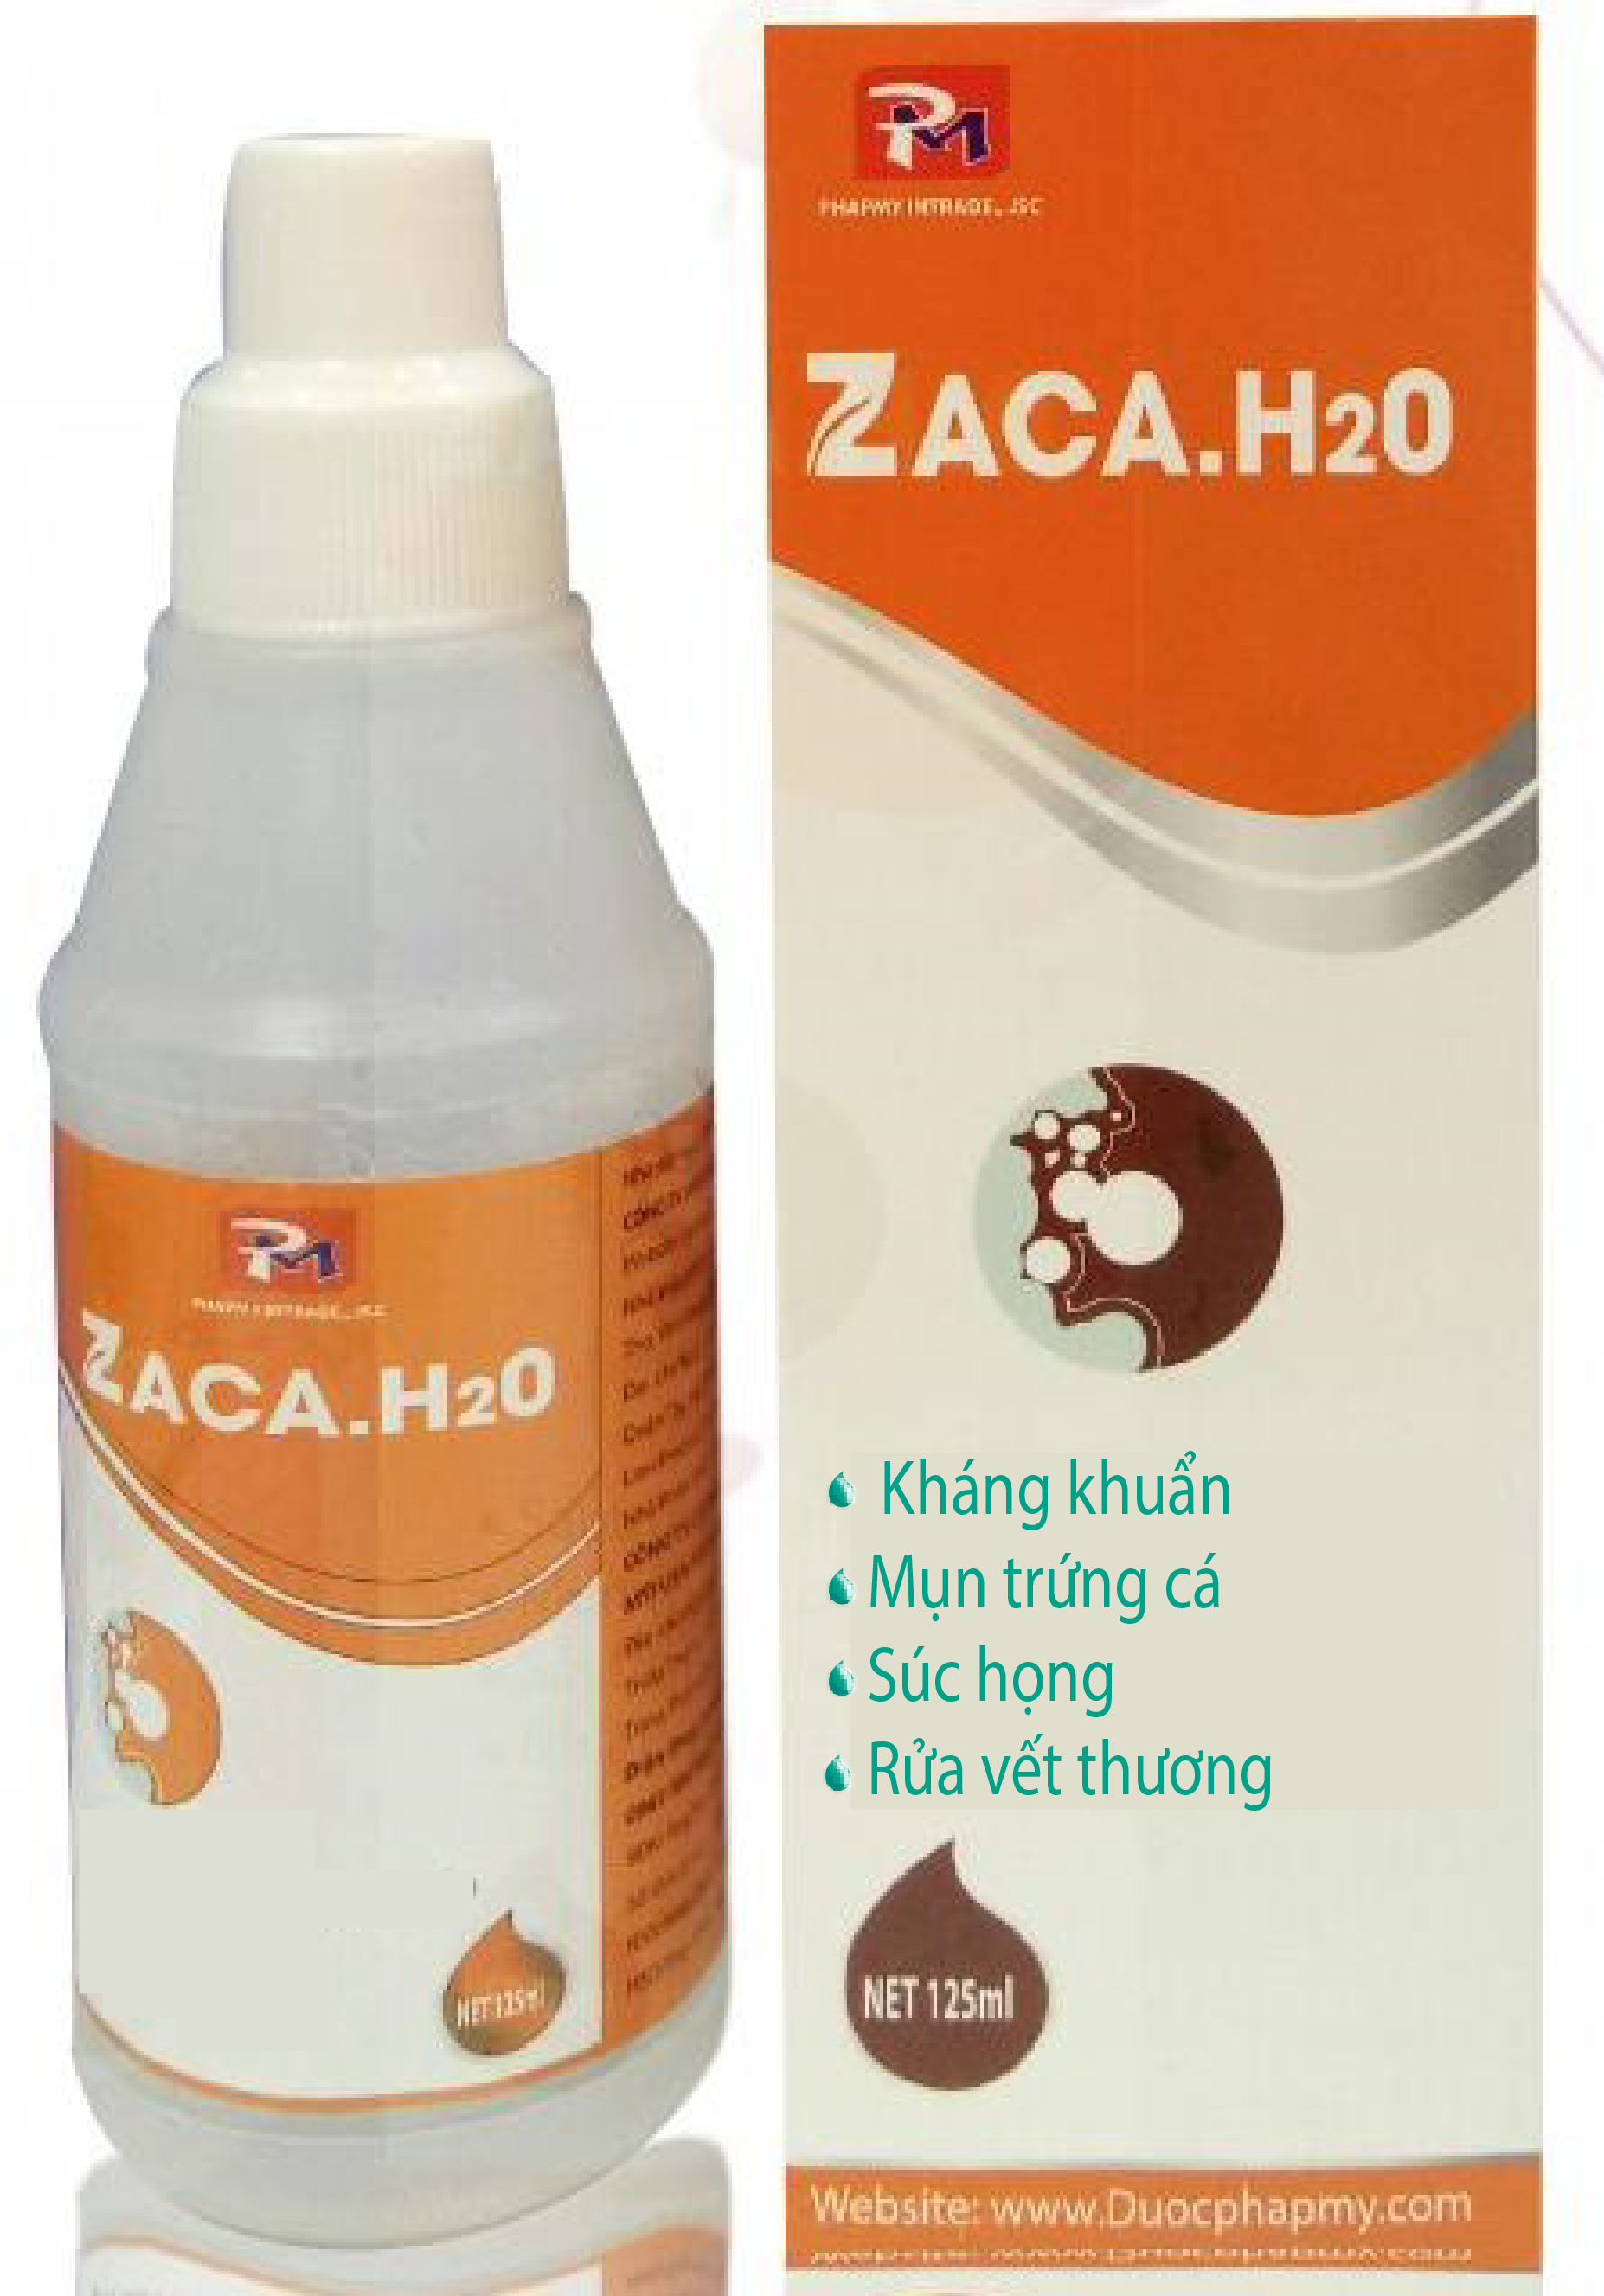 ZACA.H20